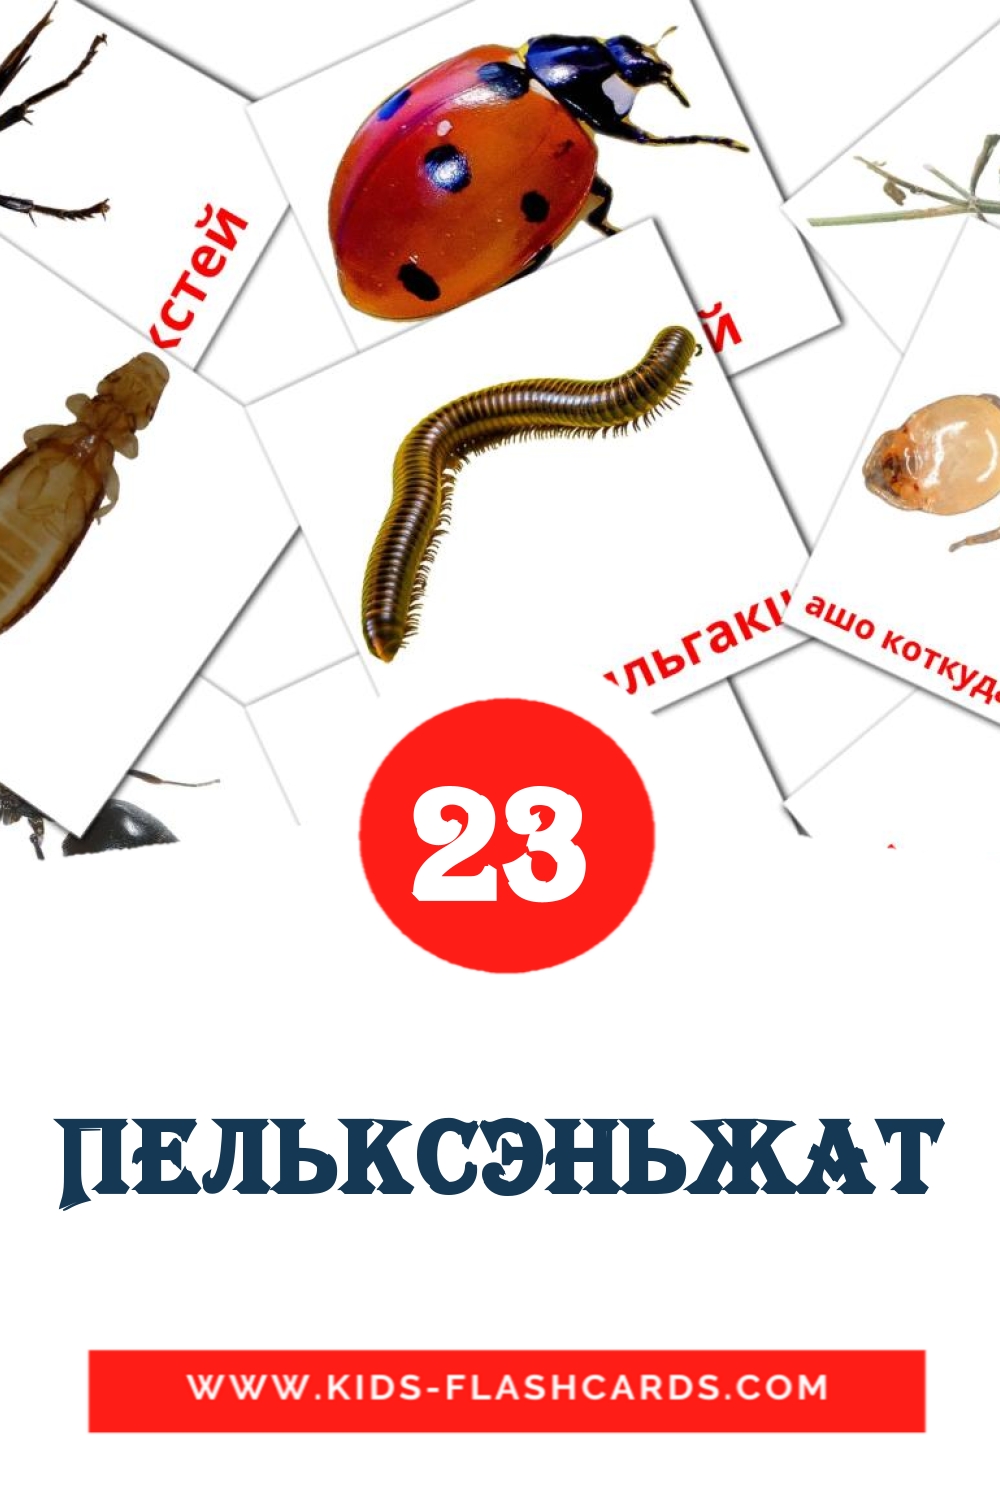 23 Пельксэньжат Picture Cards for Kindergarden in erzya